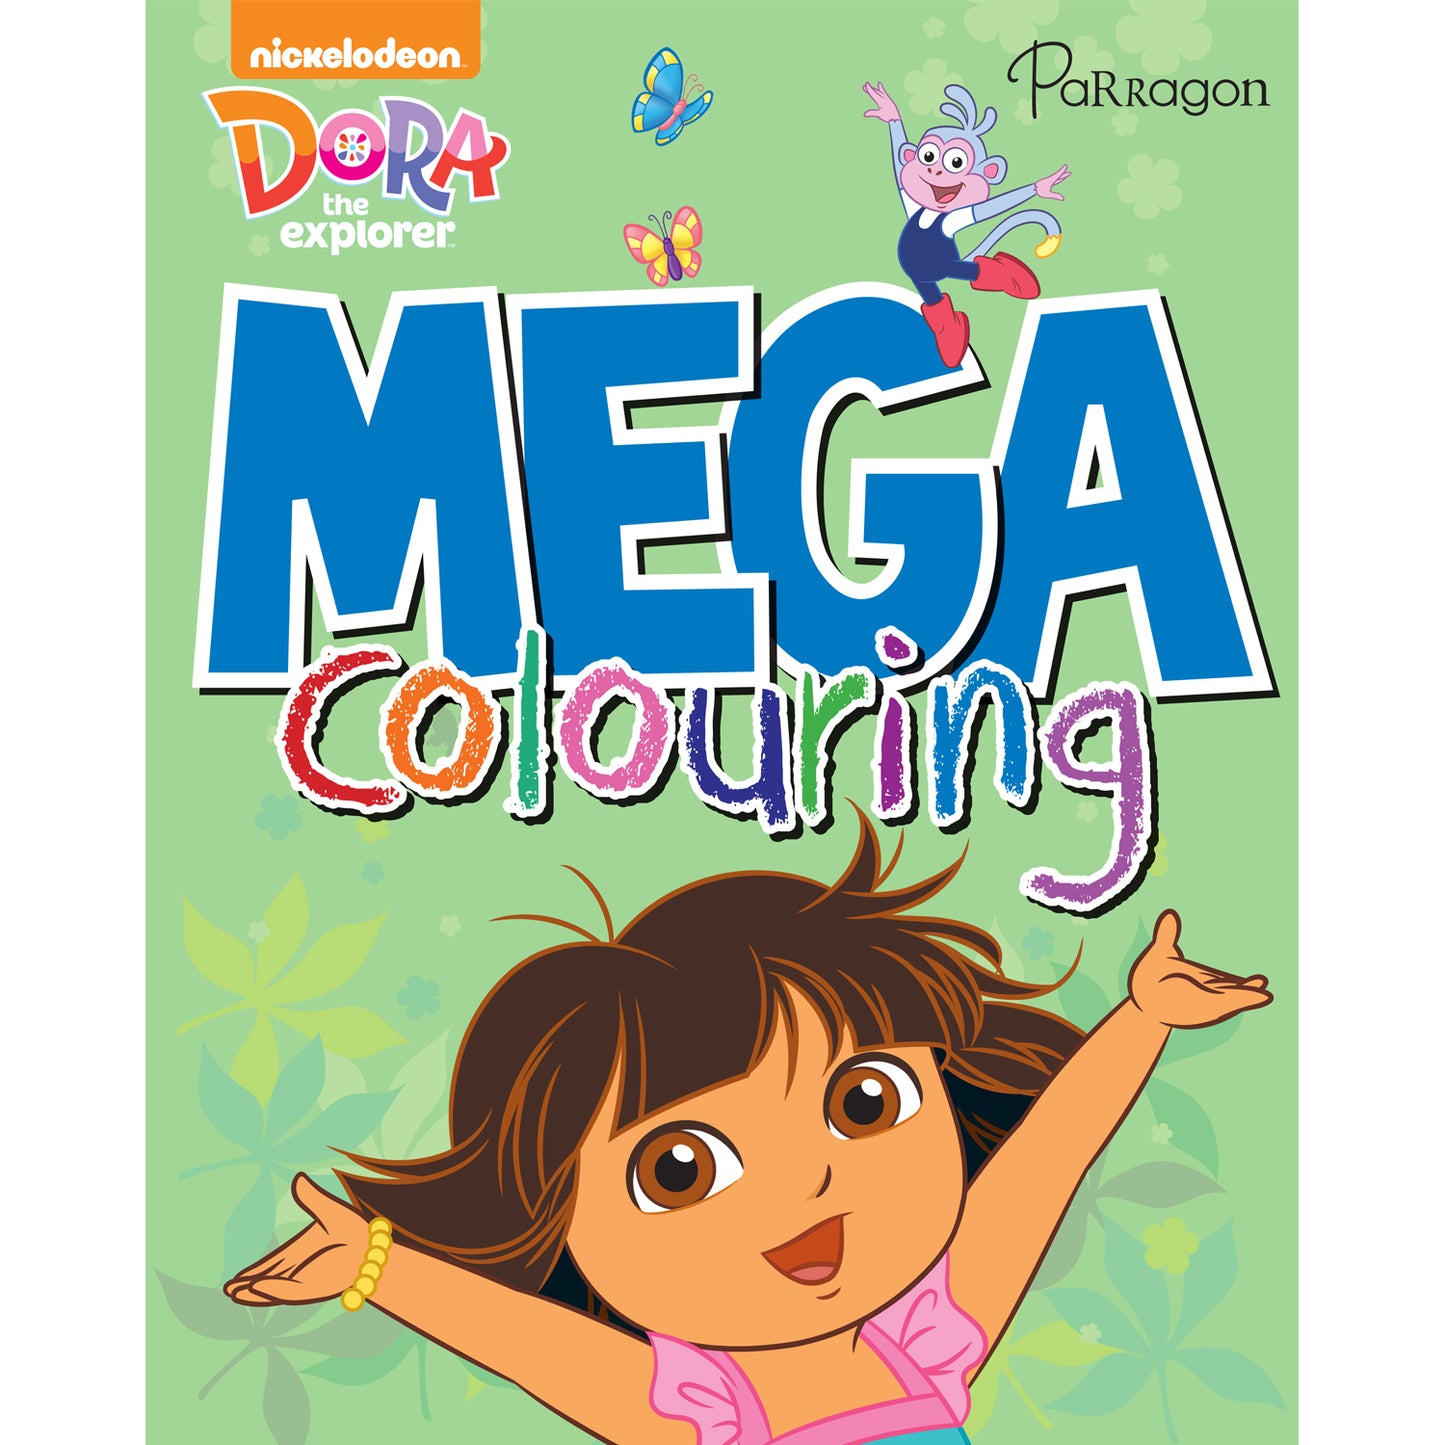 Dora the Explorer Mega Colouring